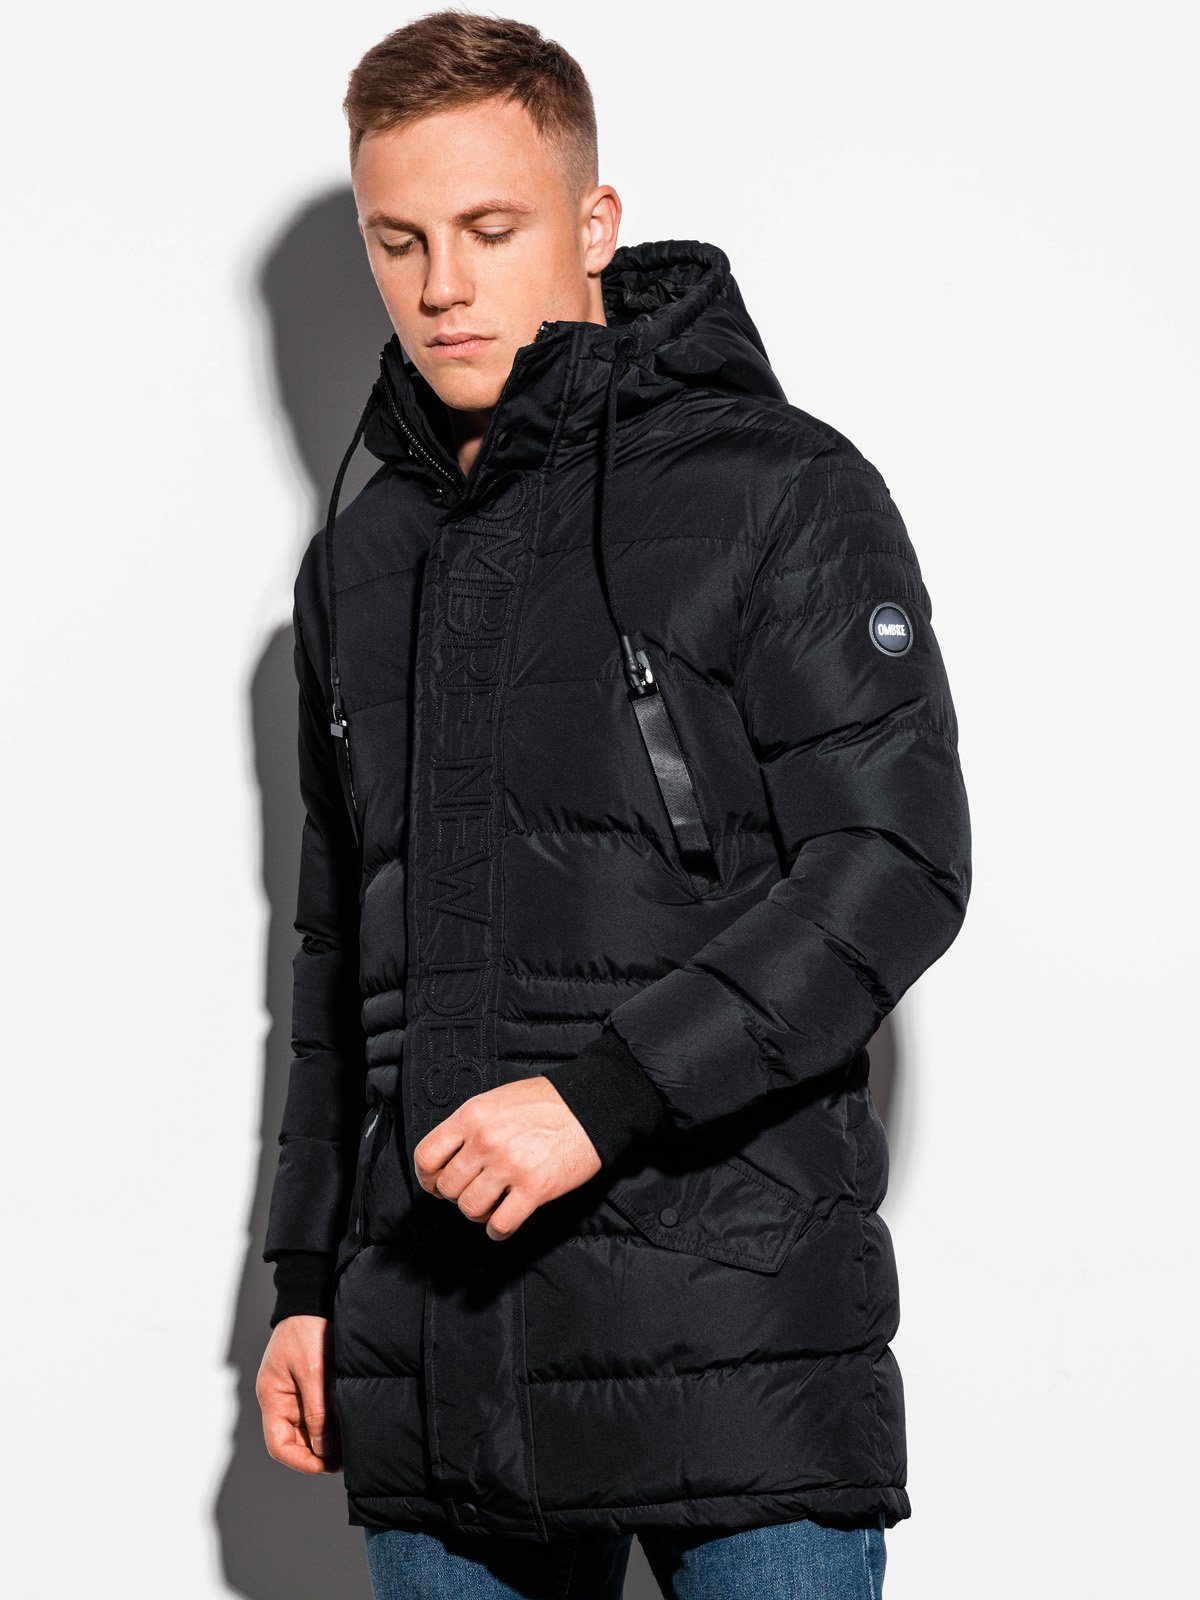  Men  s  winter  jacket  C411 black MODONE wholesale 